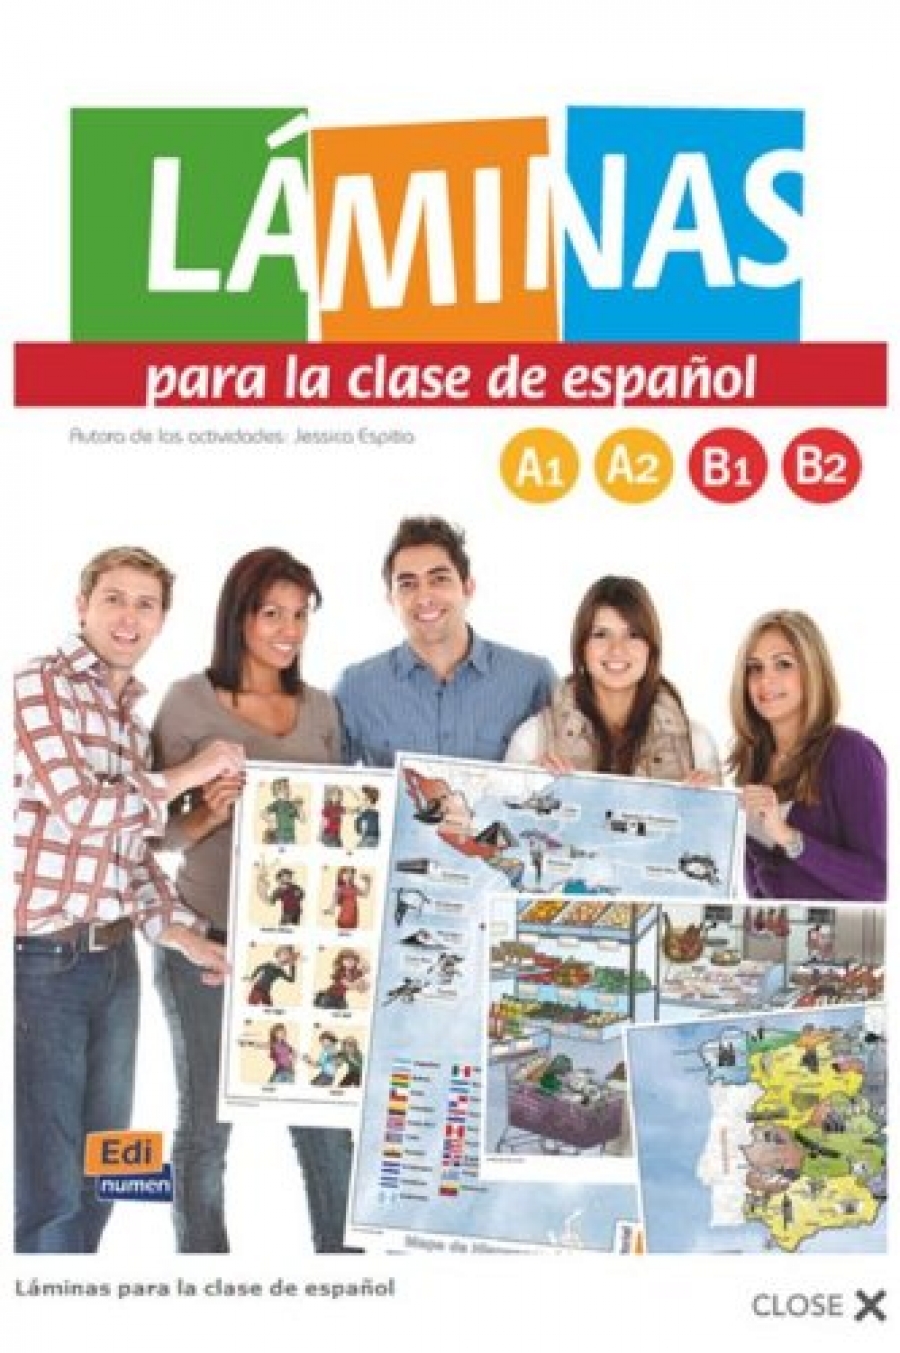   Jessica Espitia Laminas para la clase de espanol 